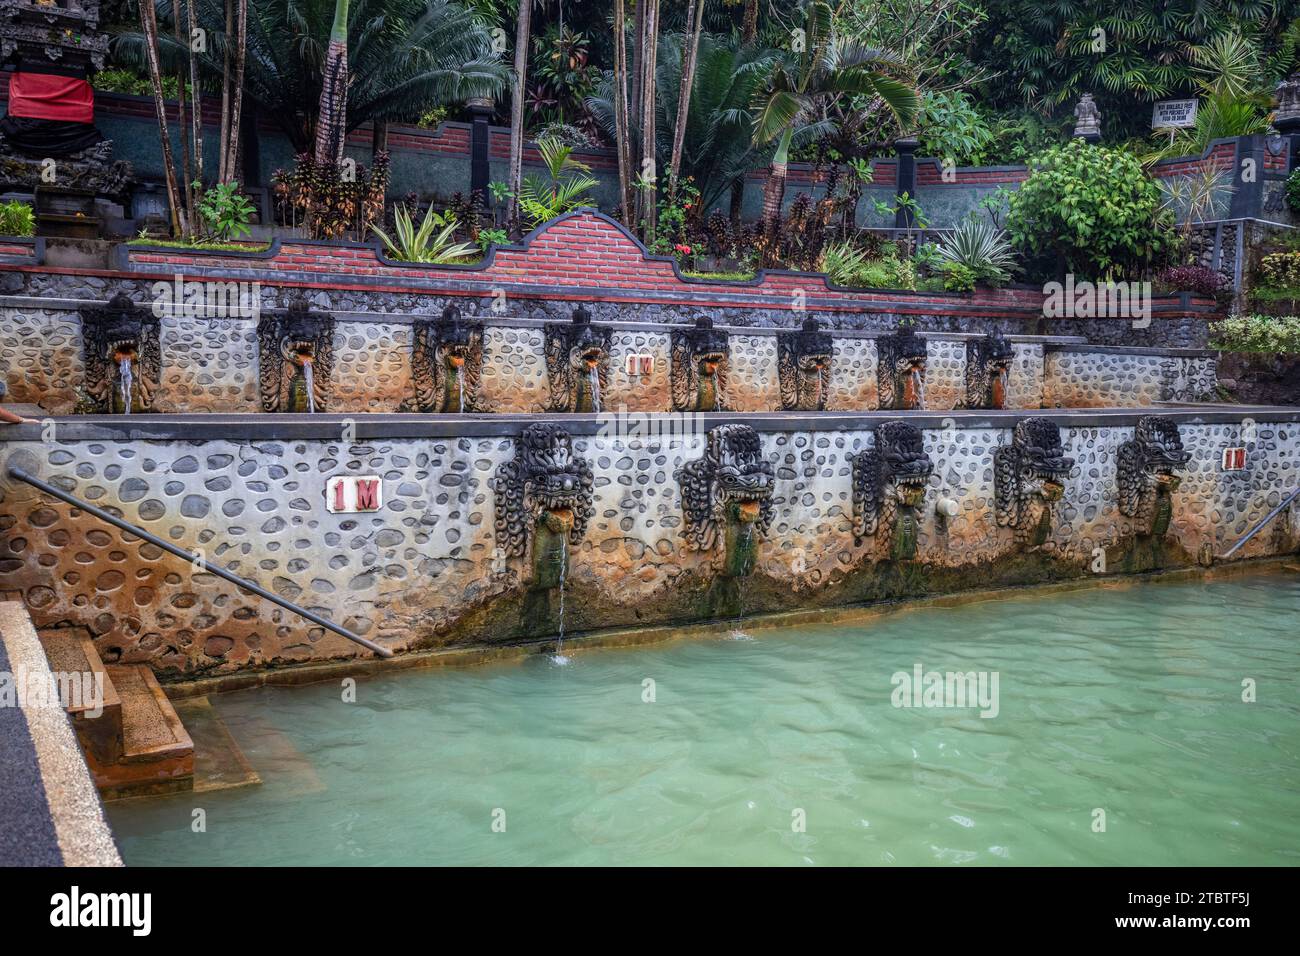 Hot springs, thermal bath in the tropical jungle, ritual sulphurous pool for swimming, Banjar, Bali Stock Photo